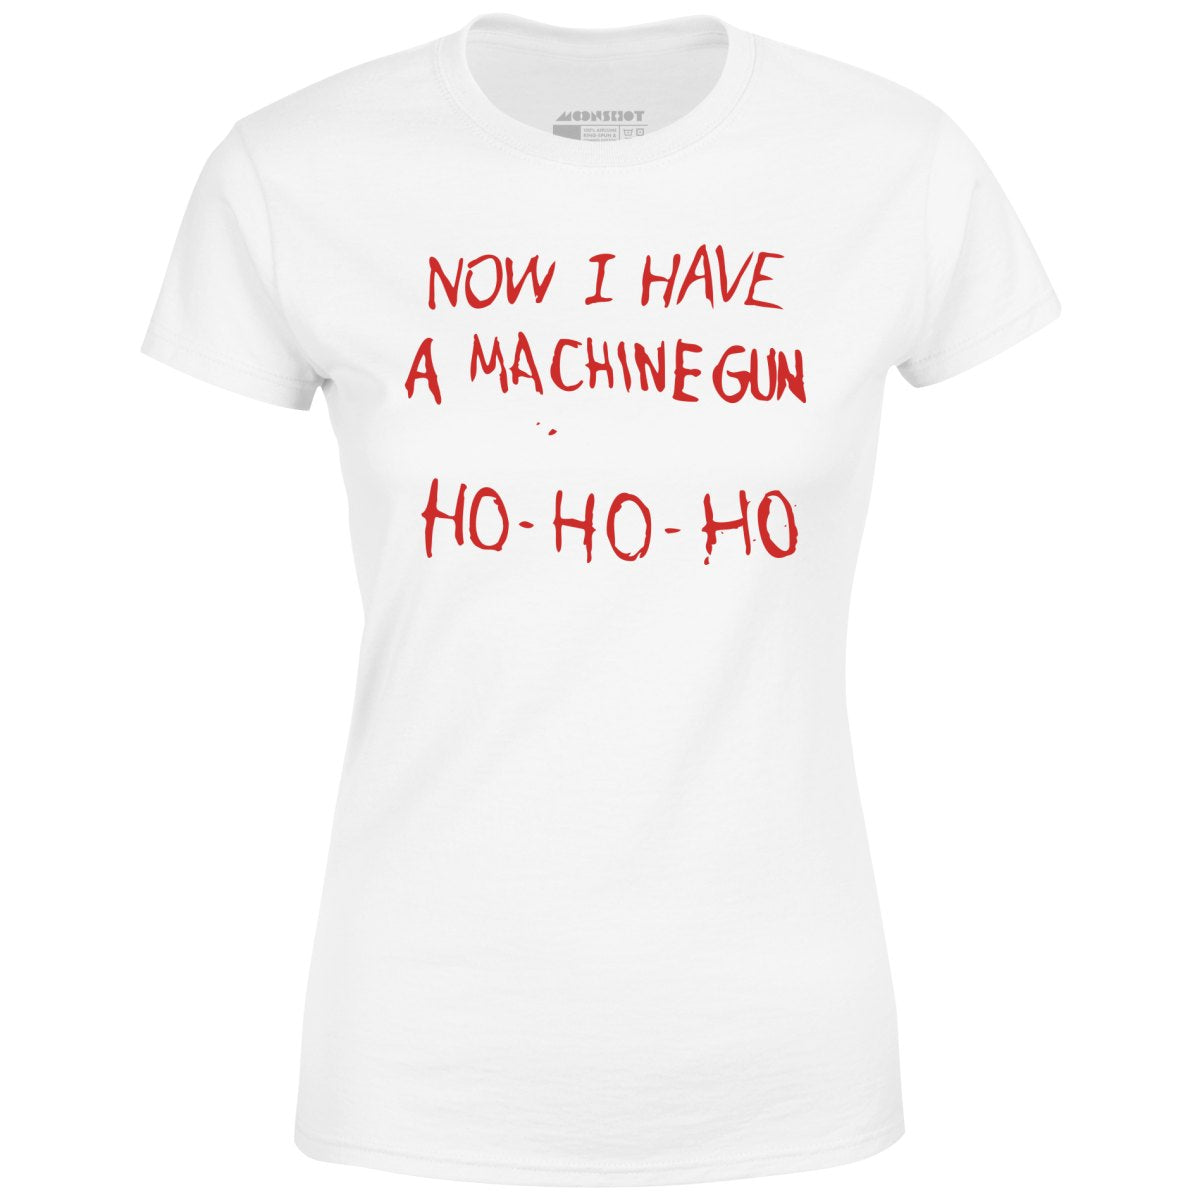 Now I Have a Machine Gun Ho-Ho-Ho - Women's T-Shirt